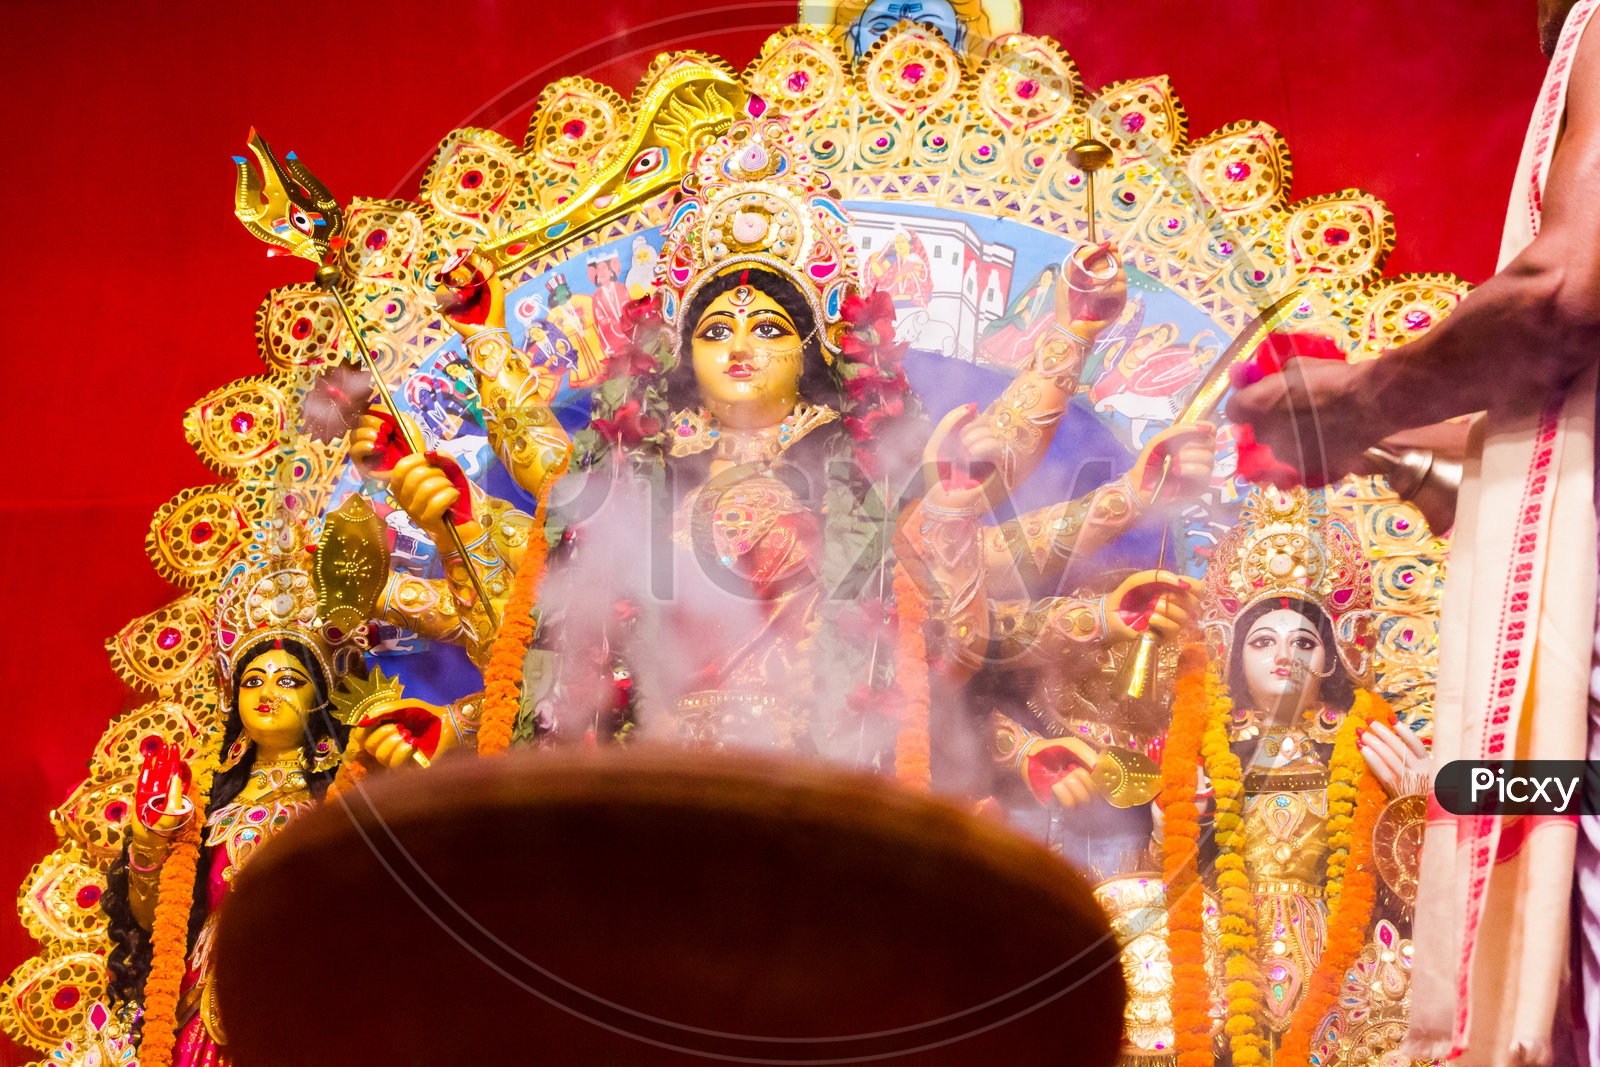 Hazed Picture Of Goddess Durga In Background Of Smoke Of Worship